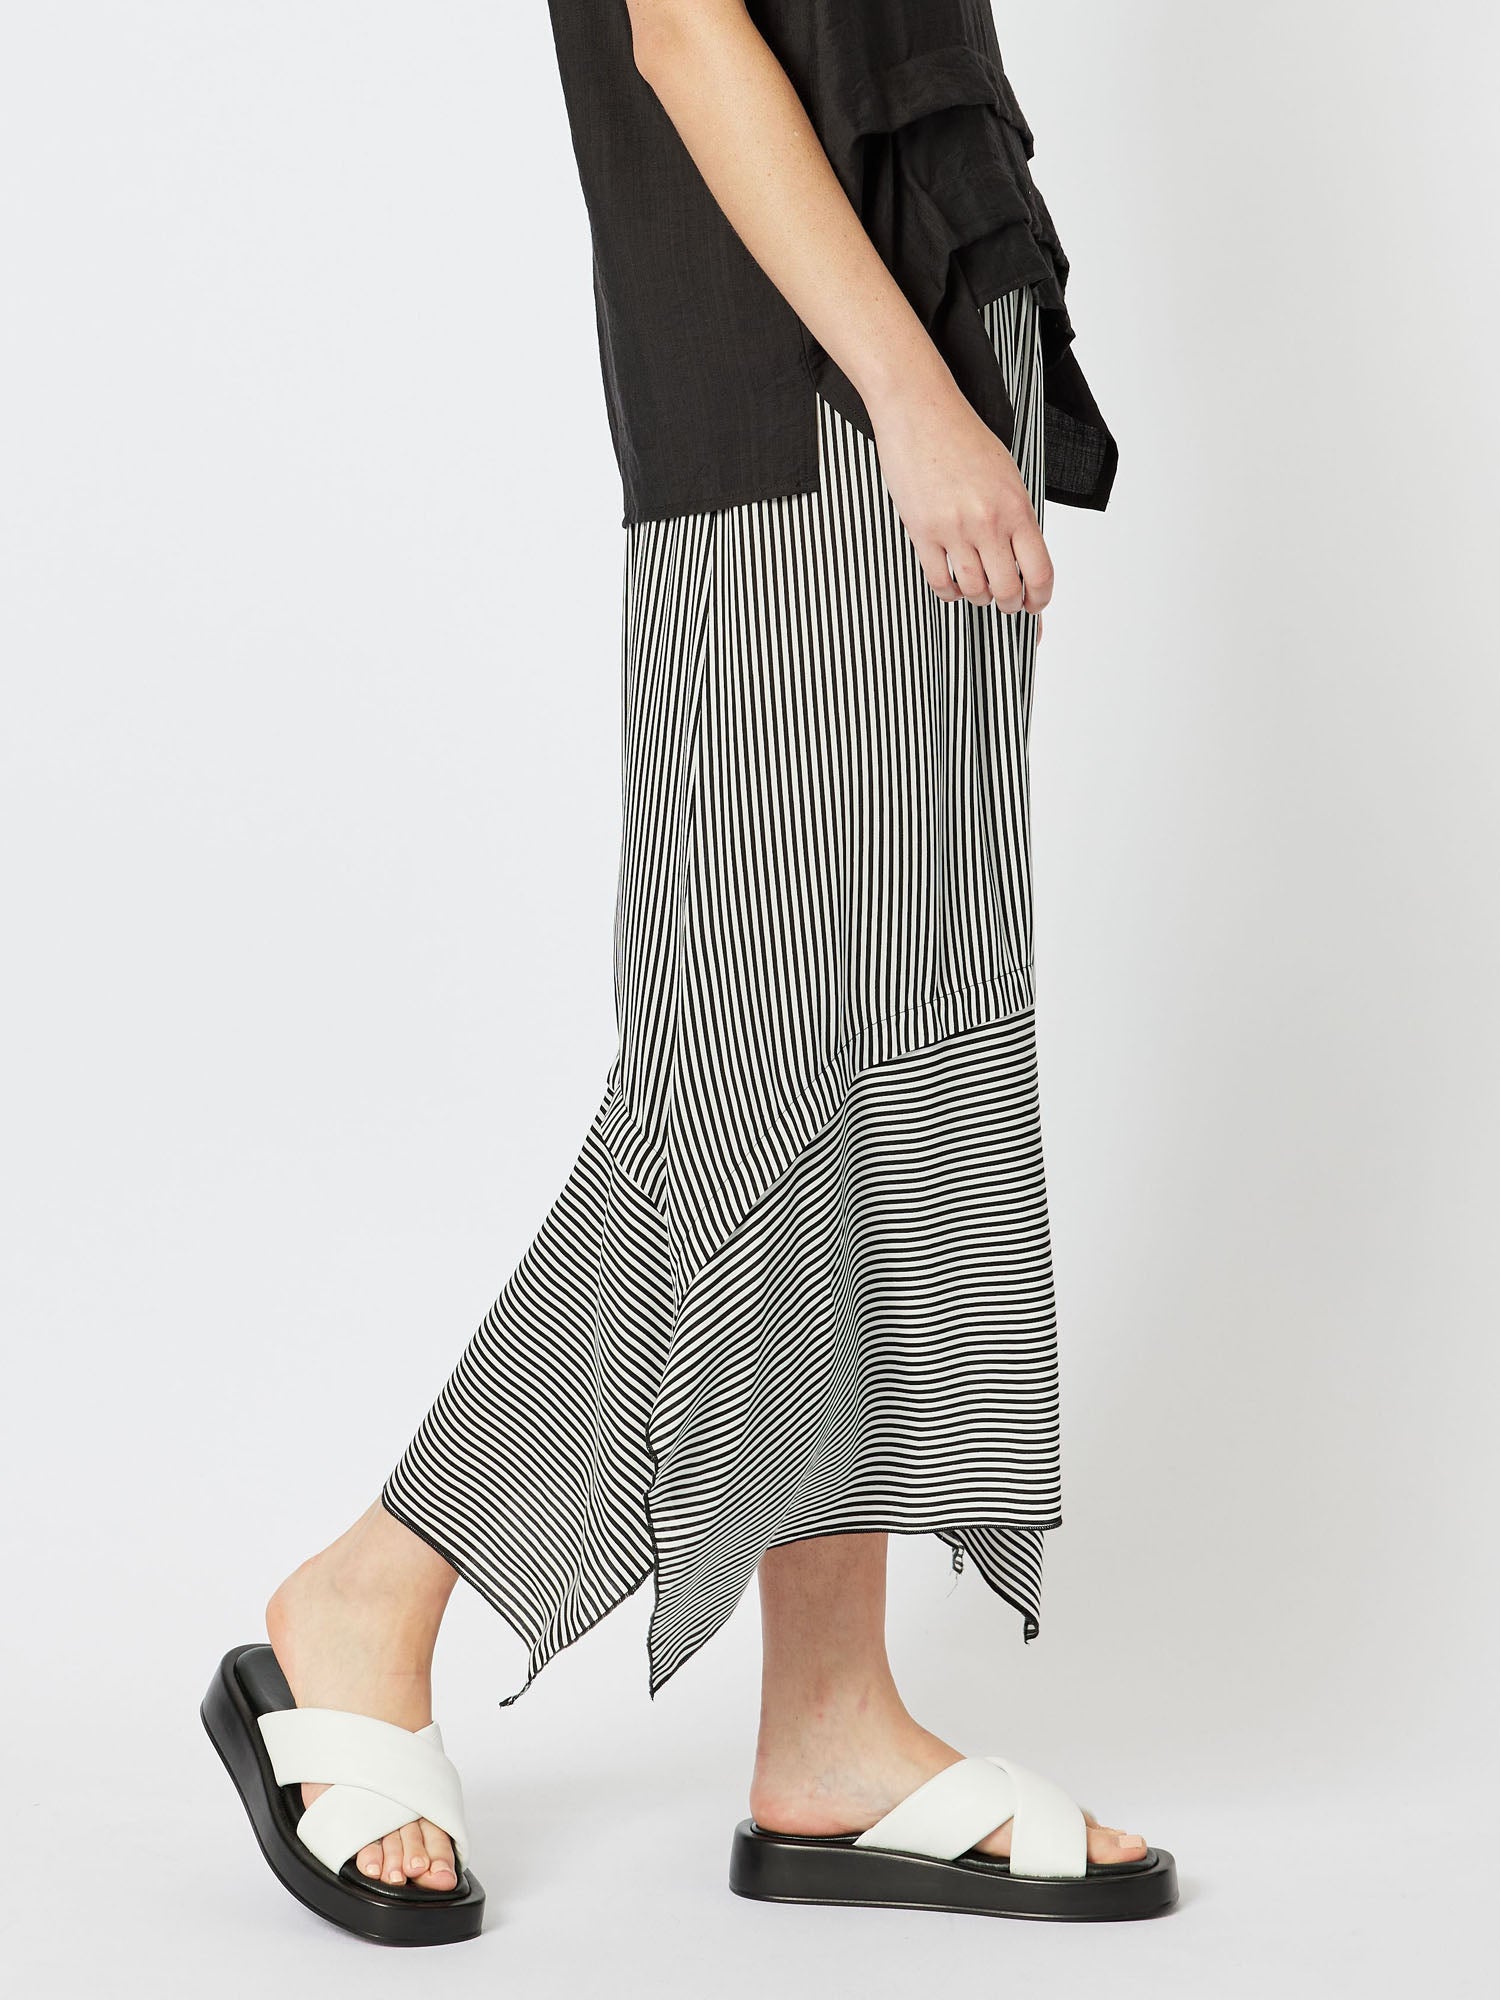 Chloe Stripe Asymmetric Skirt - Black/White